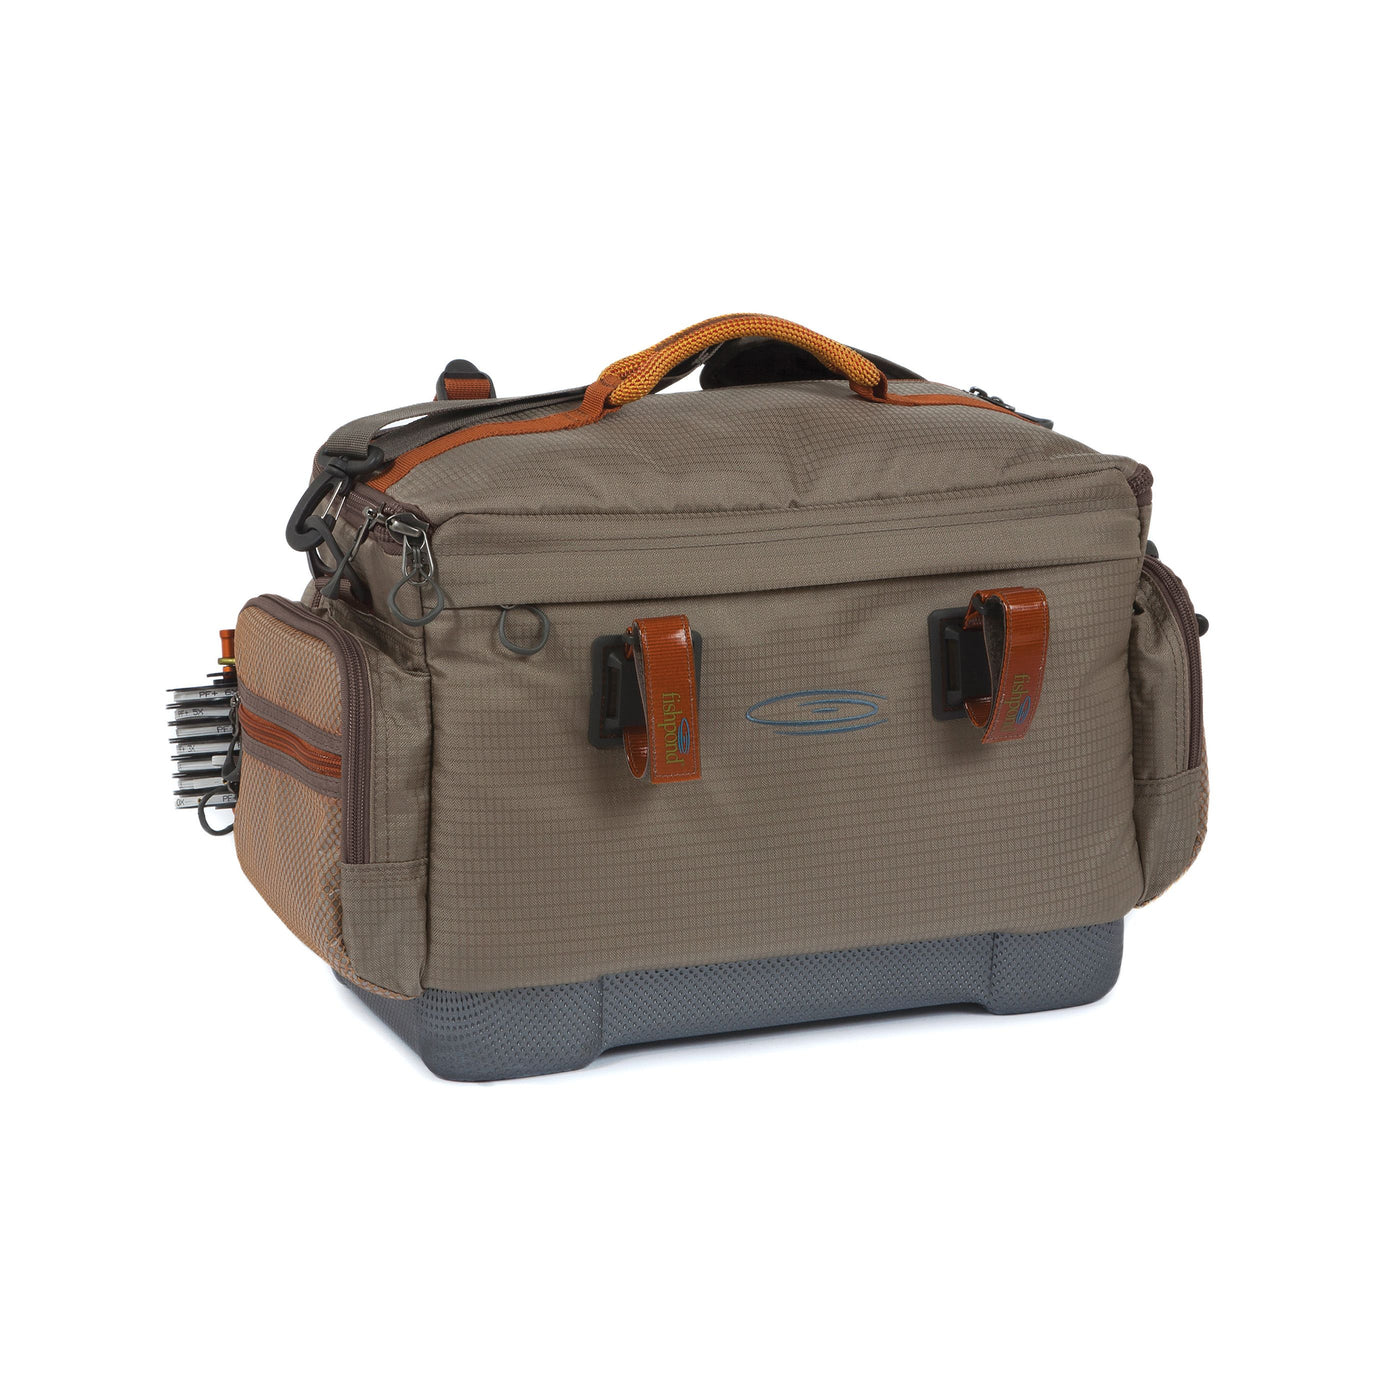 Fishpond Gear Bags, Duffles, Carryons, Bags, Flyfishing Cases